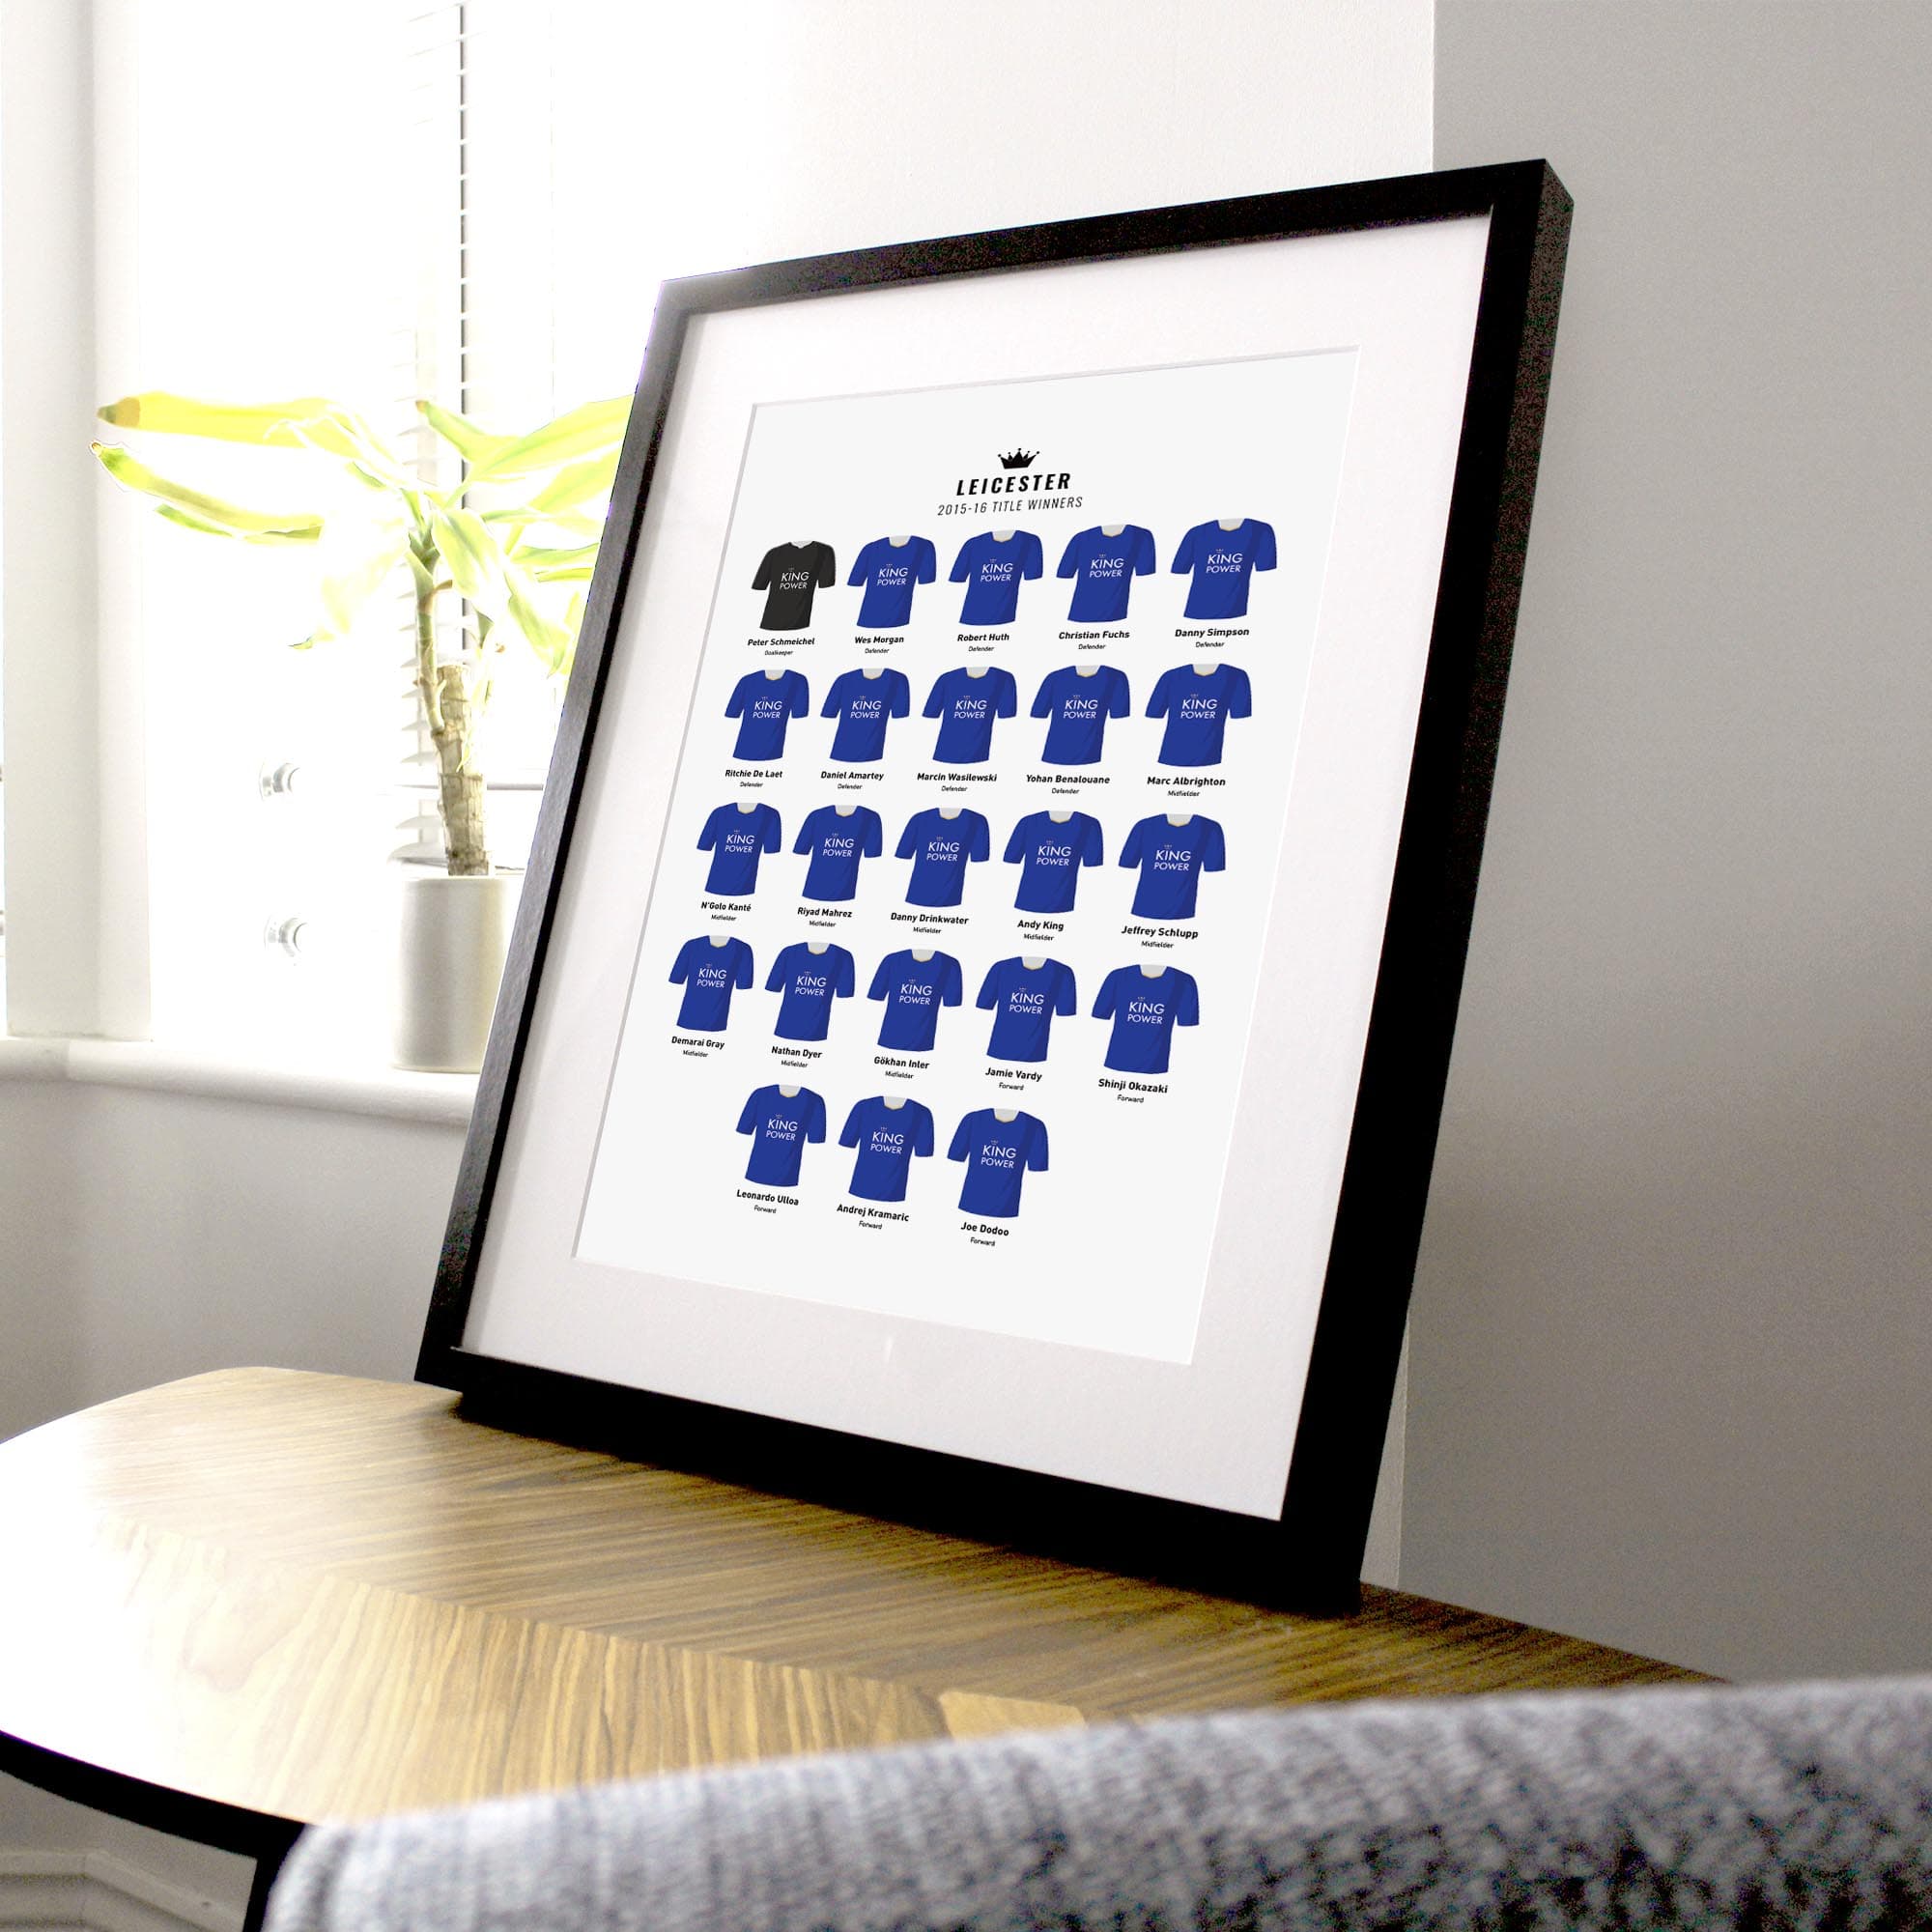 Leicester 2016 Title Winners Football Team Print Good Team On Paper